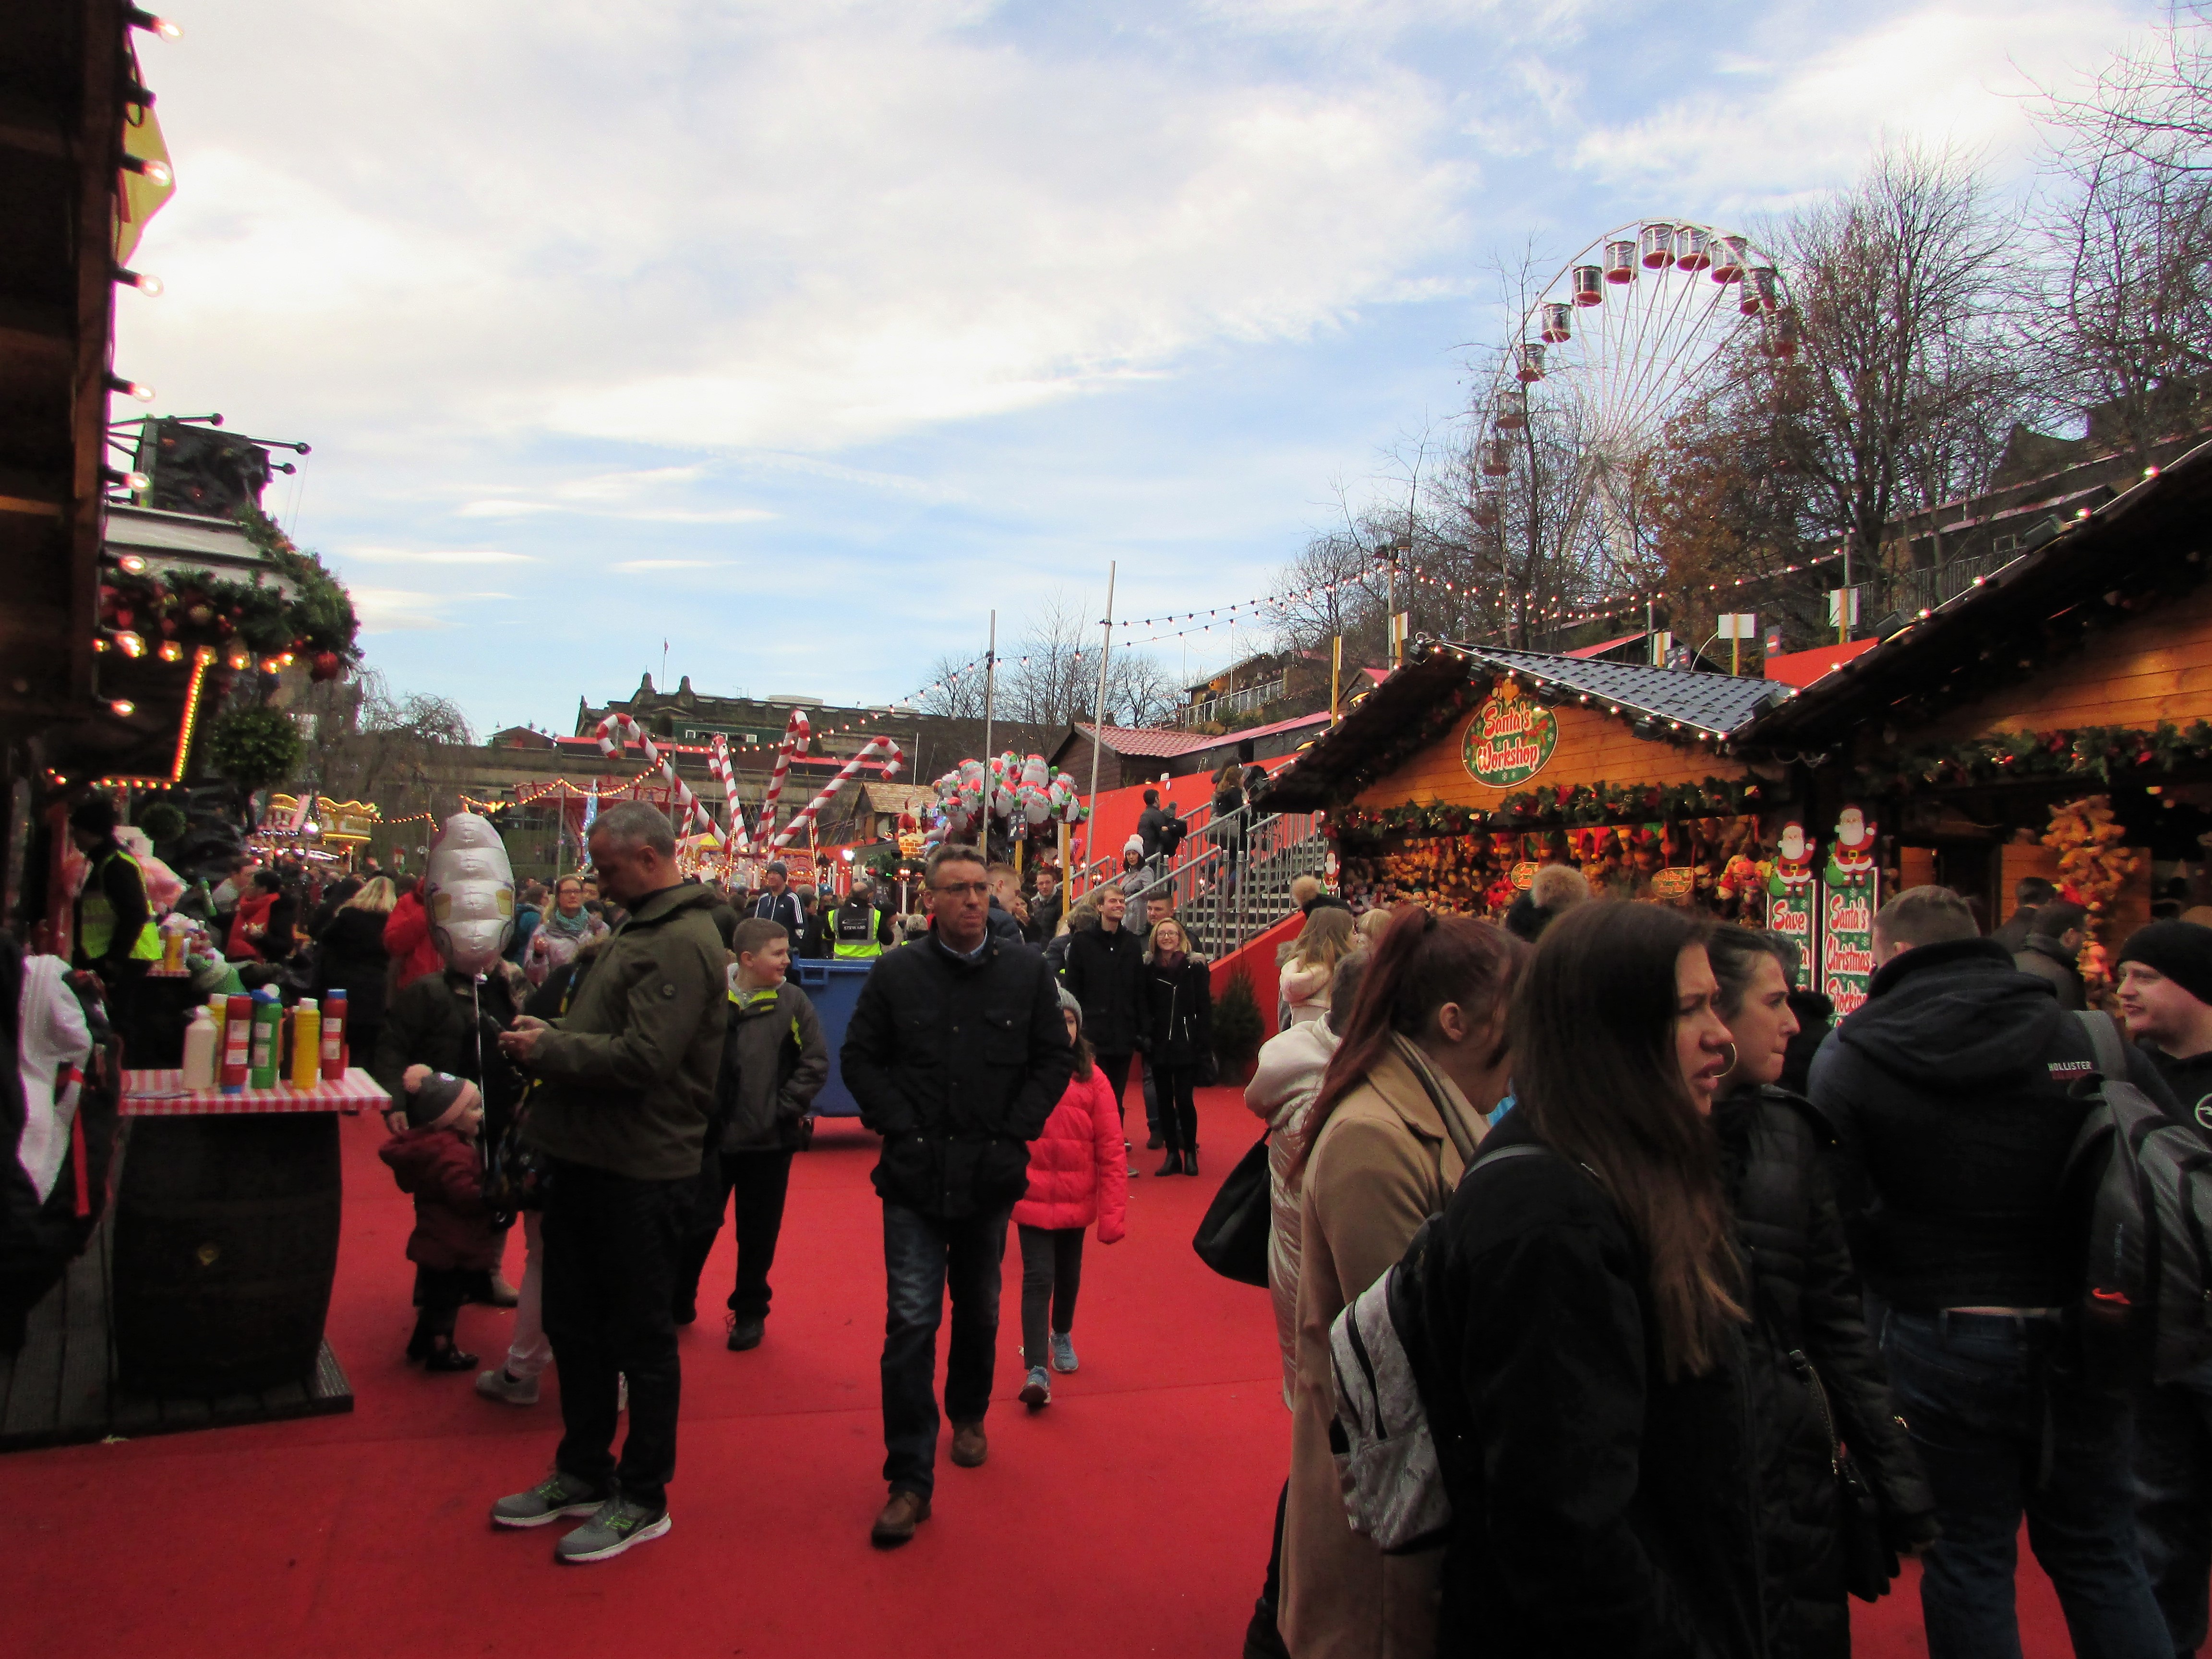 Europe’s most popular Christmas markets: Edinburgh ranked #2